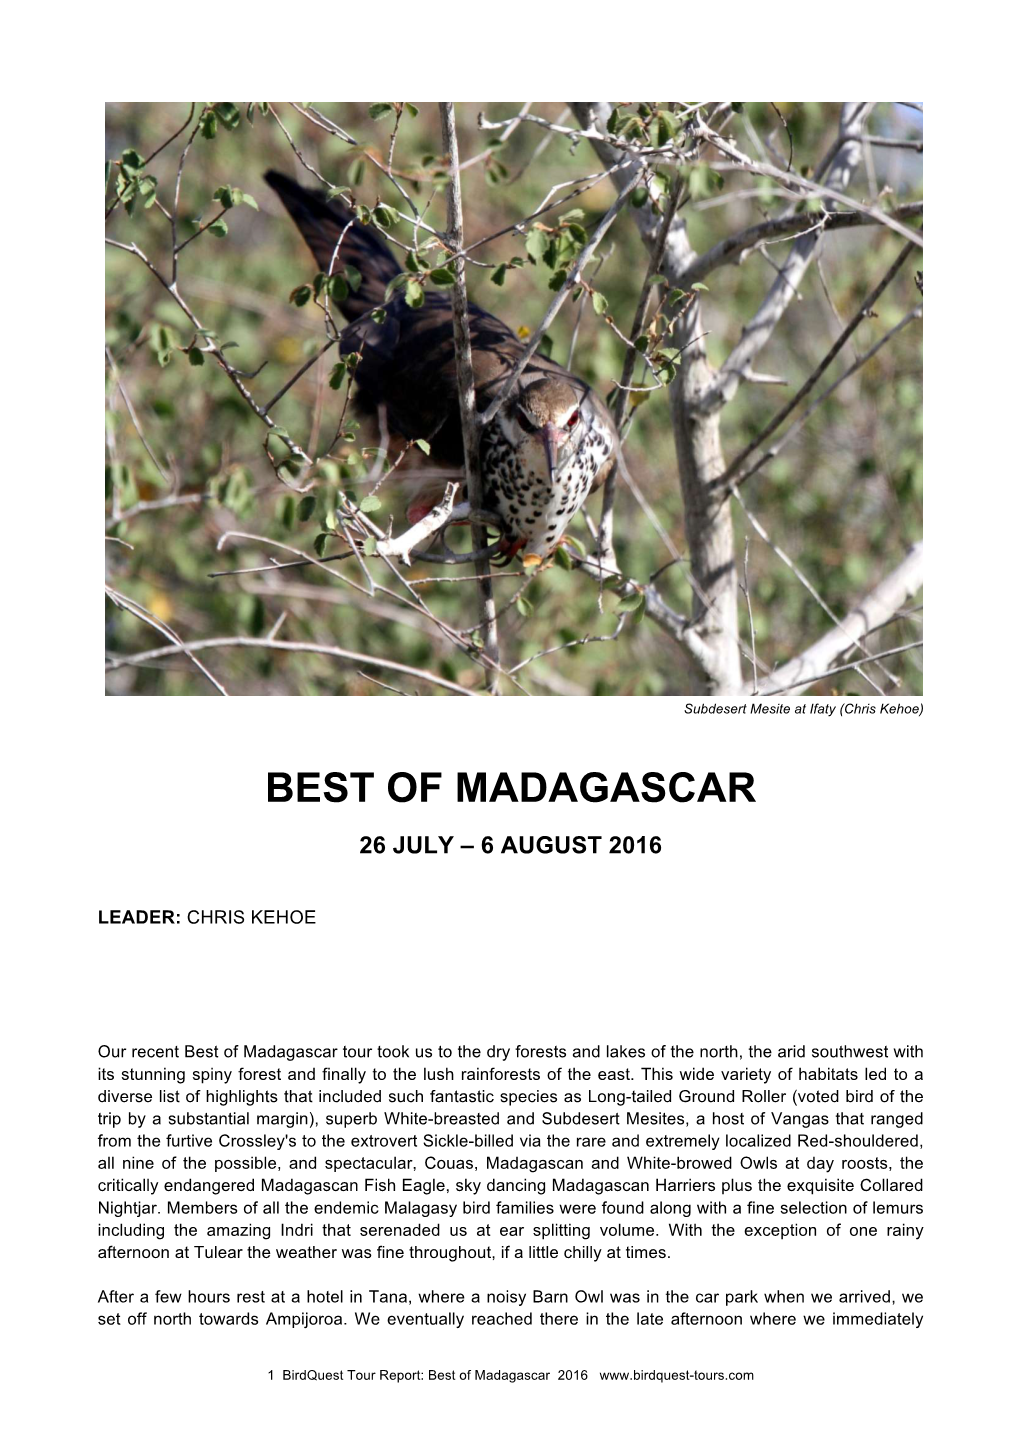 Best of Madagascar